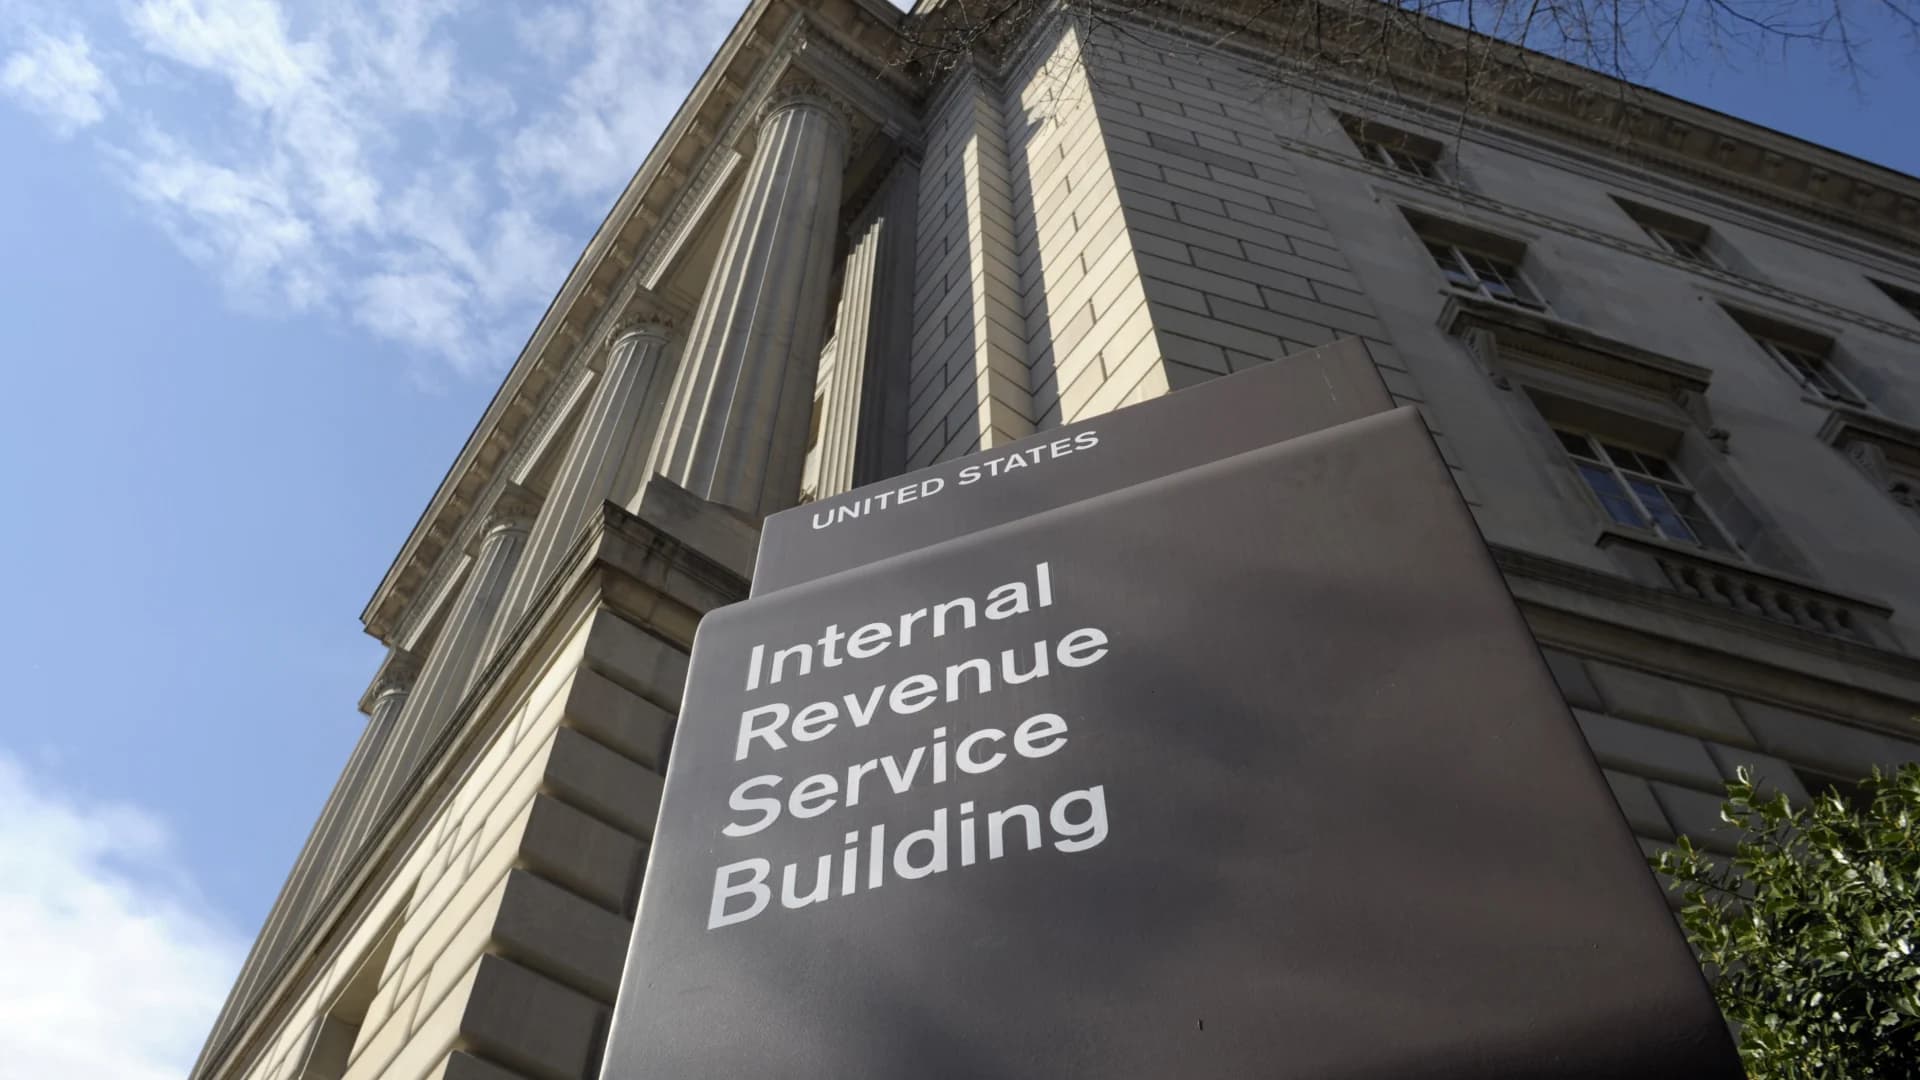 IRS sends letters to Advance Child Tax Credit recipients to help prepare tax return